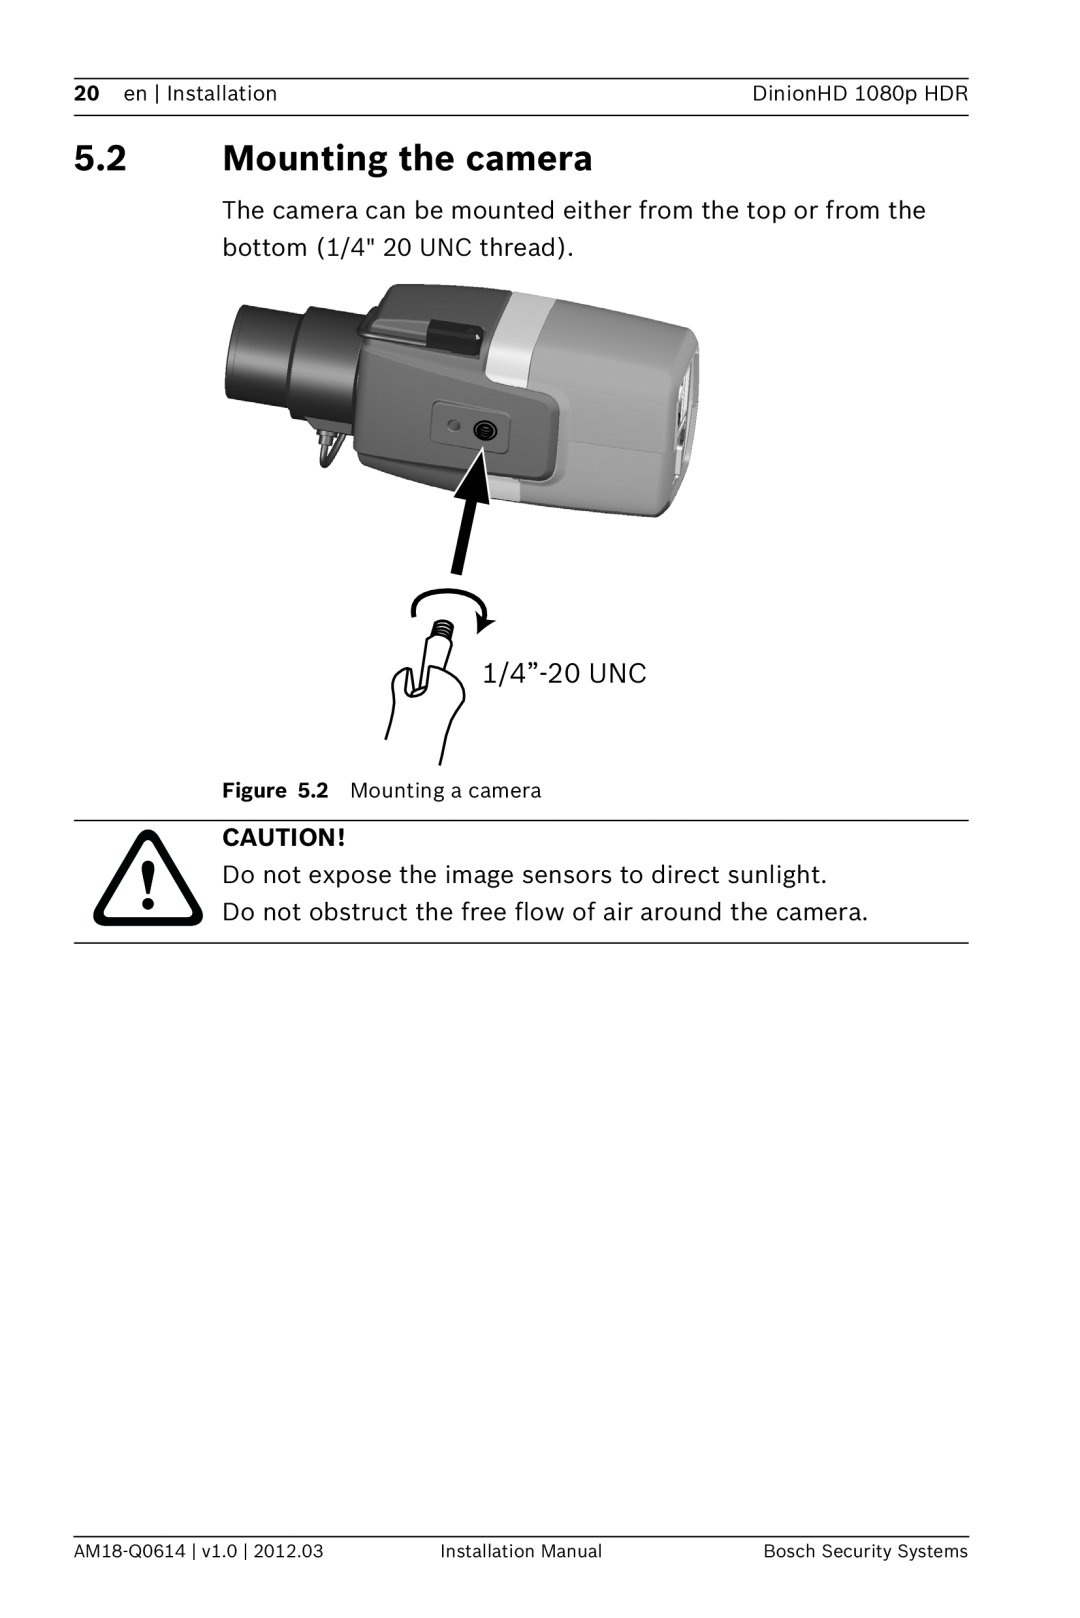 Bosch Appliances nbn-932 installation manual 5.2Mounting the camera, 1/4”-20UNC 